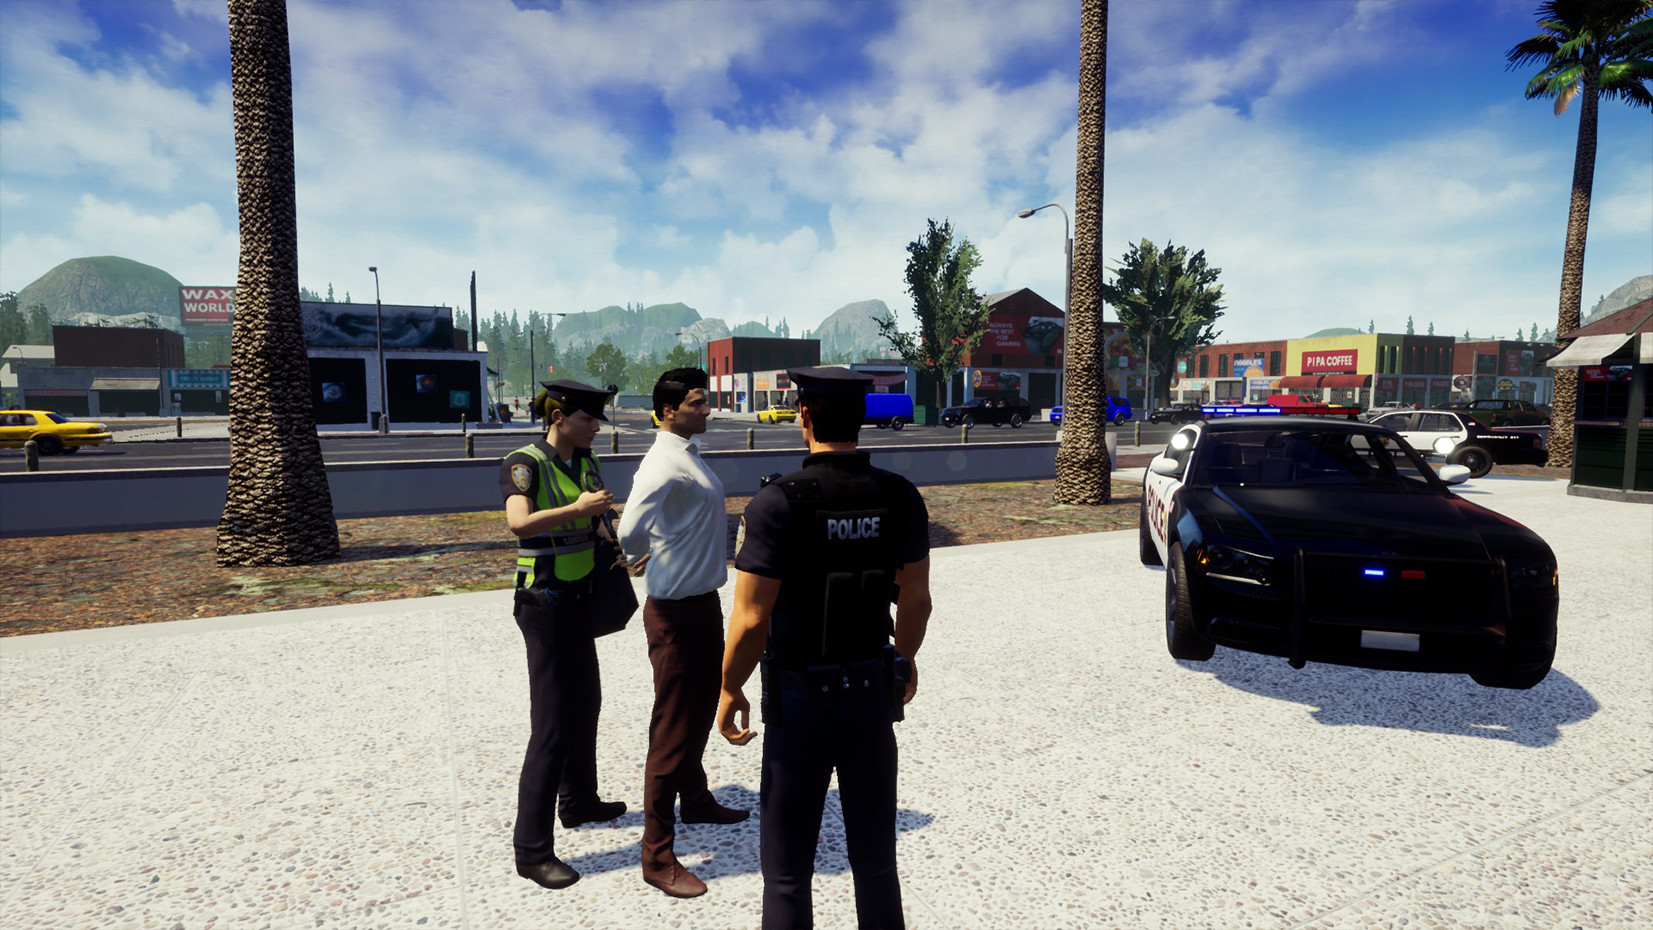 Save 70% on Police Simulator: Patrol Duty on Steam